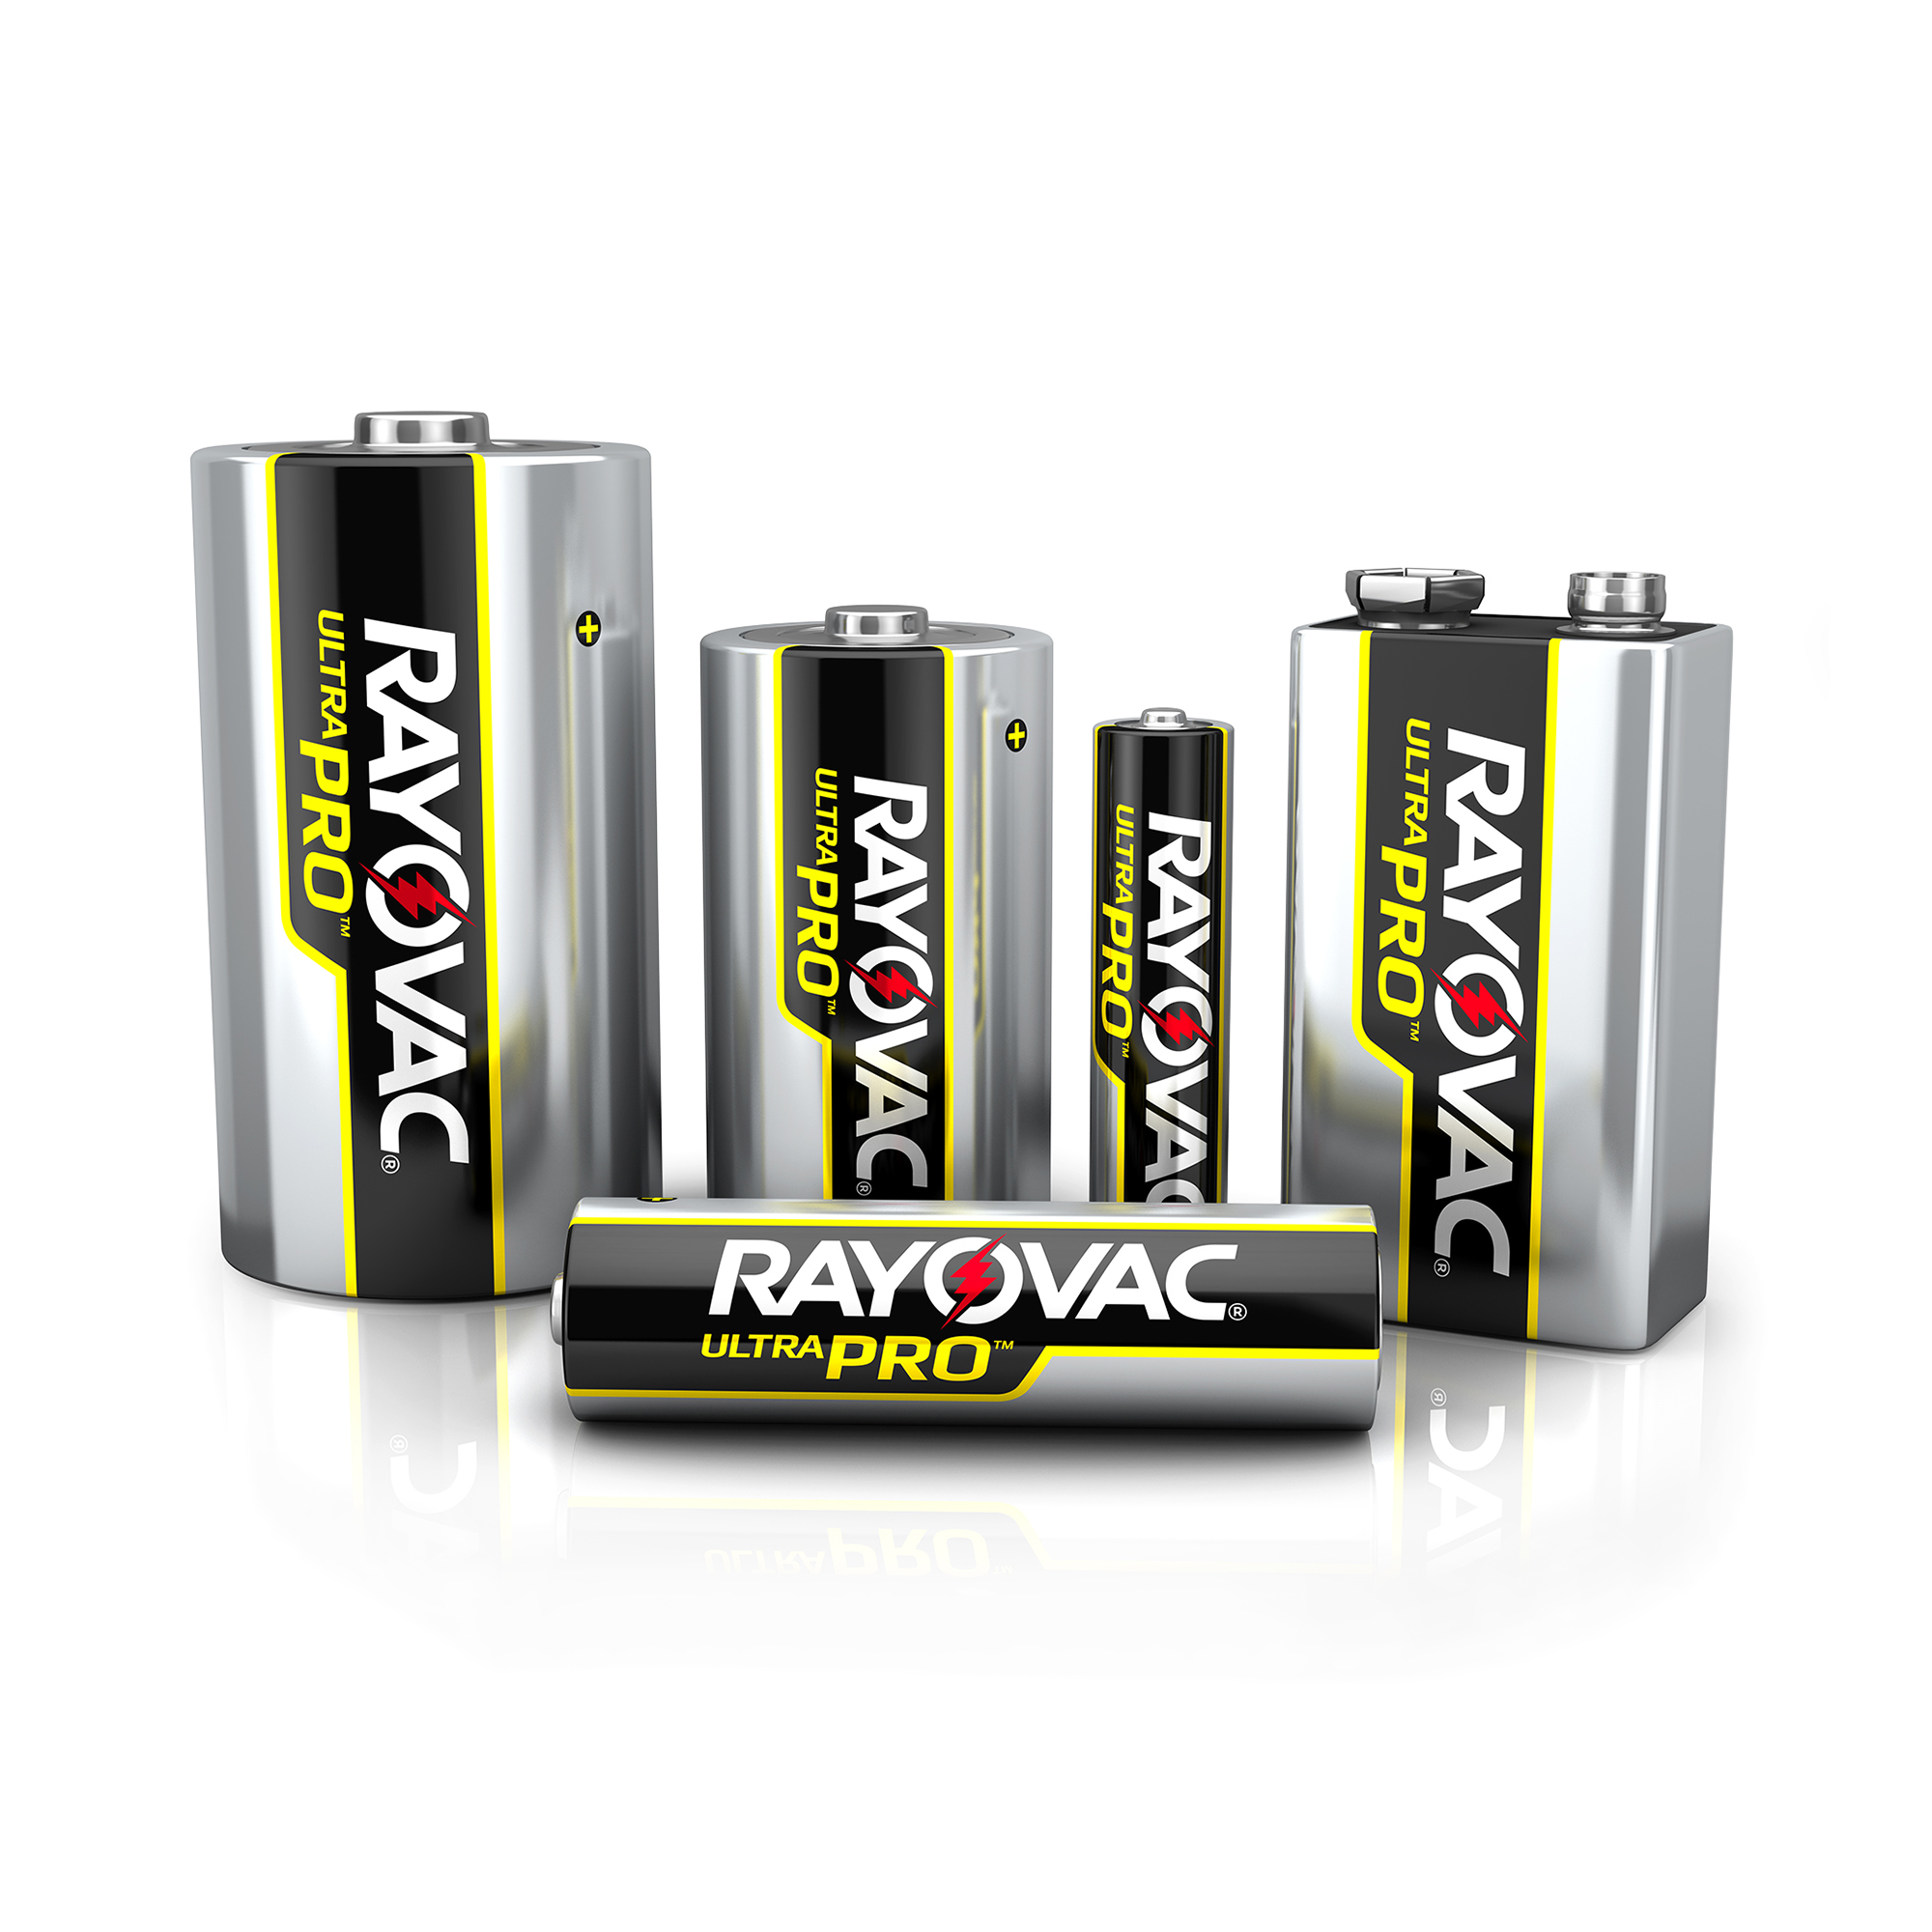 Rayovac Batteries Ultra Pro Family 2016